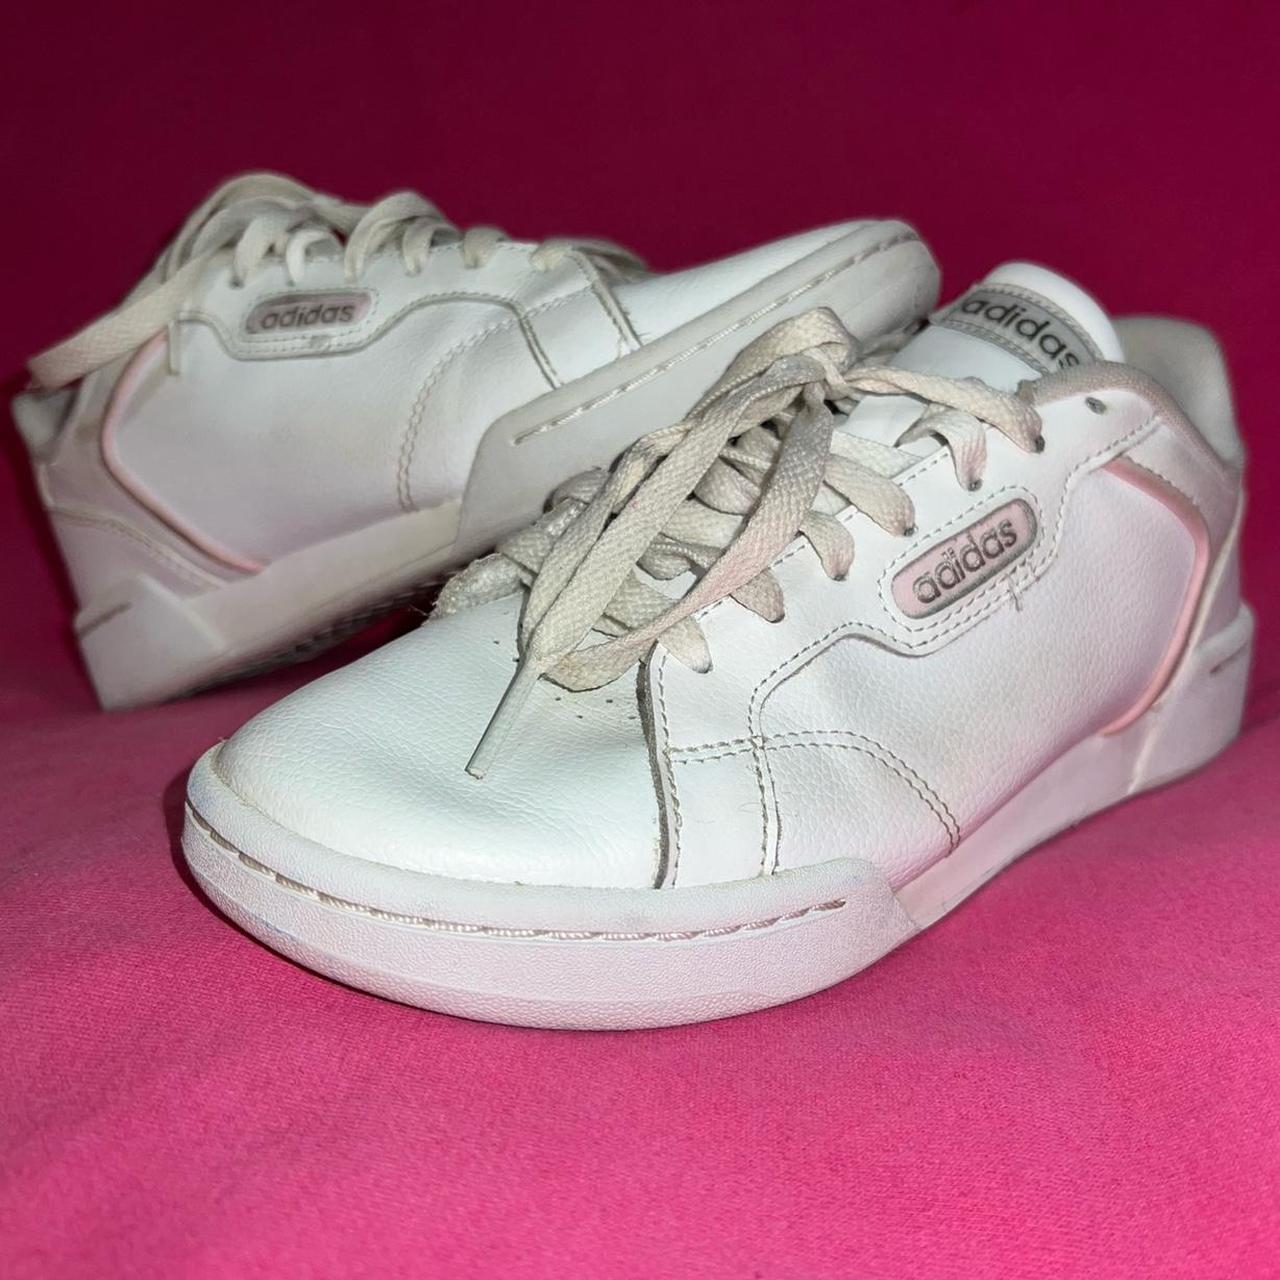 adidas Infant's Grand Court 2.0 CF Sneaker - | SoftMoc.com